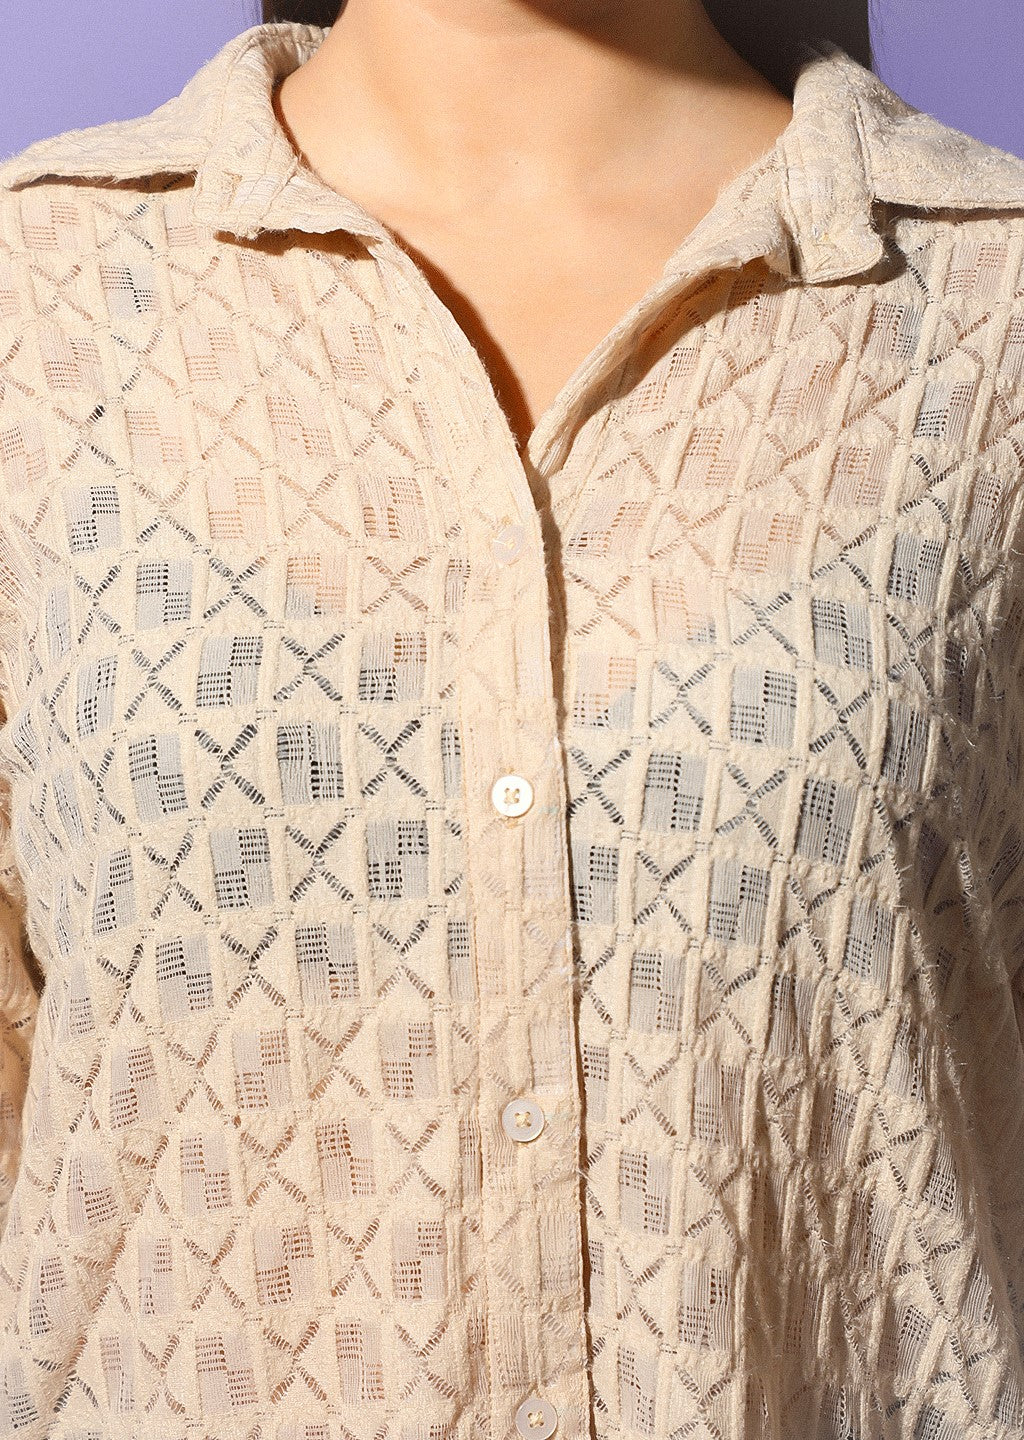 Moran Lace Shirt in Beige